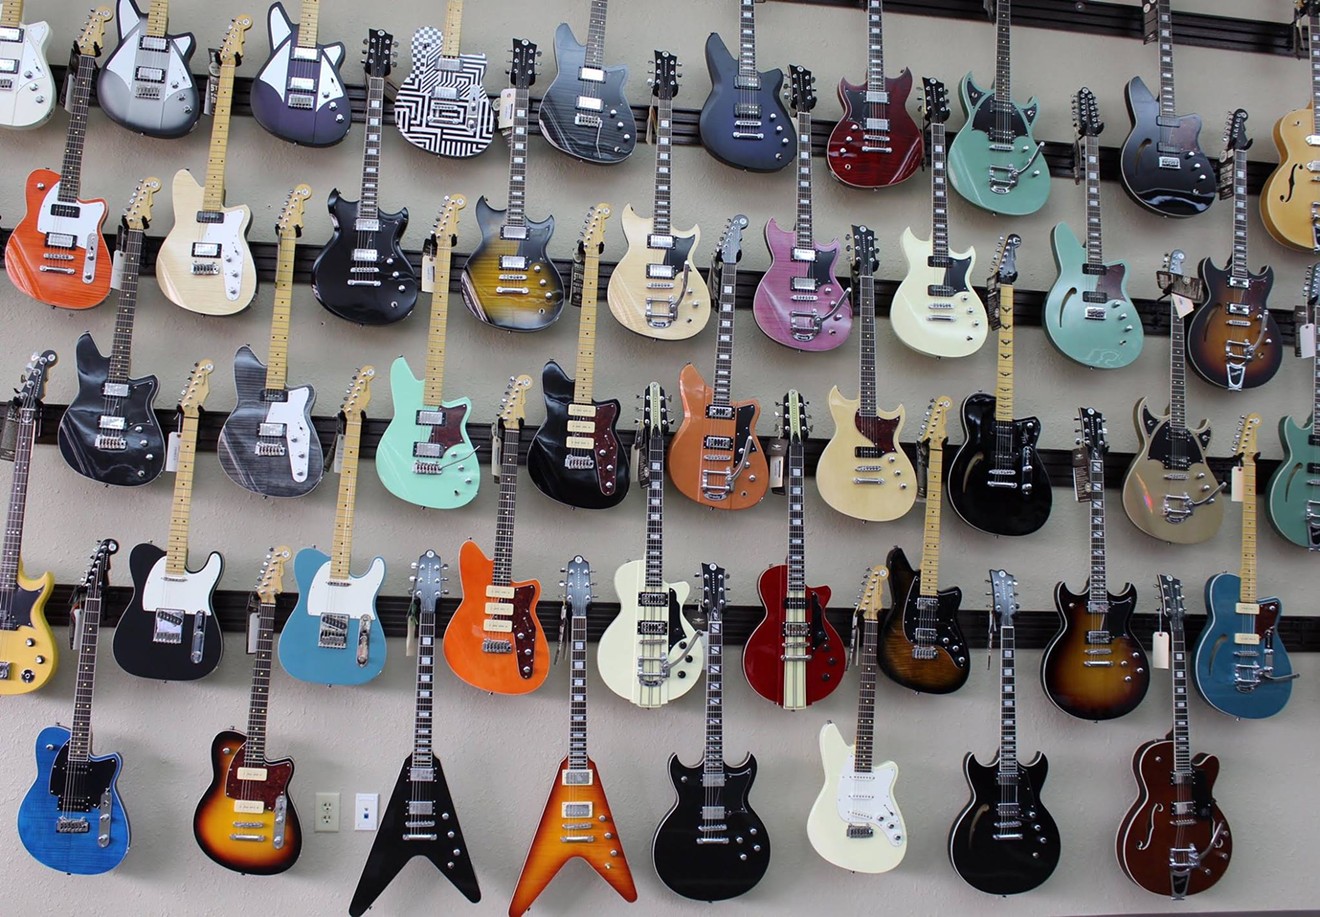 Tone Shop Guitars is a guitar nirvana.